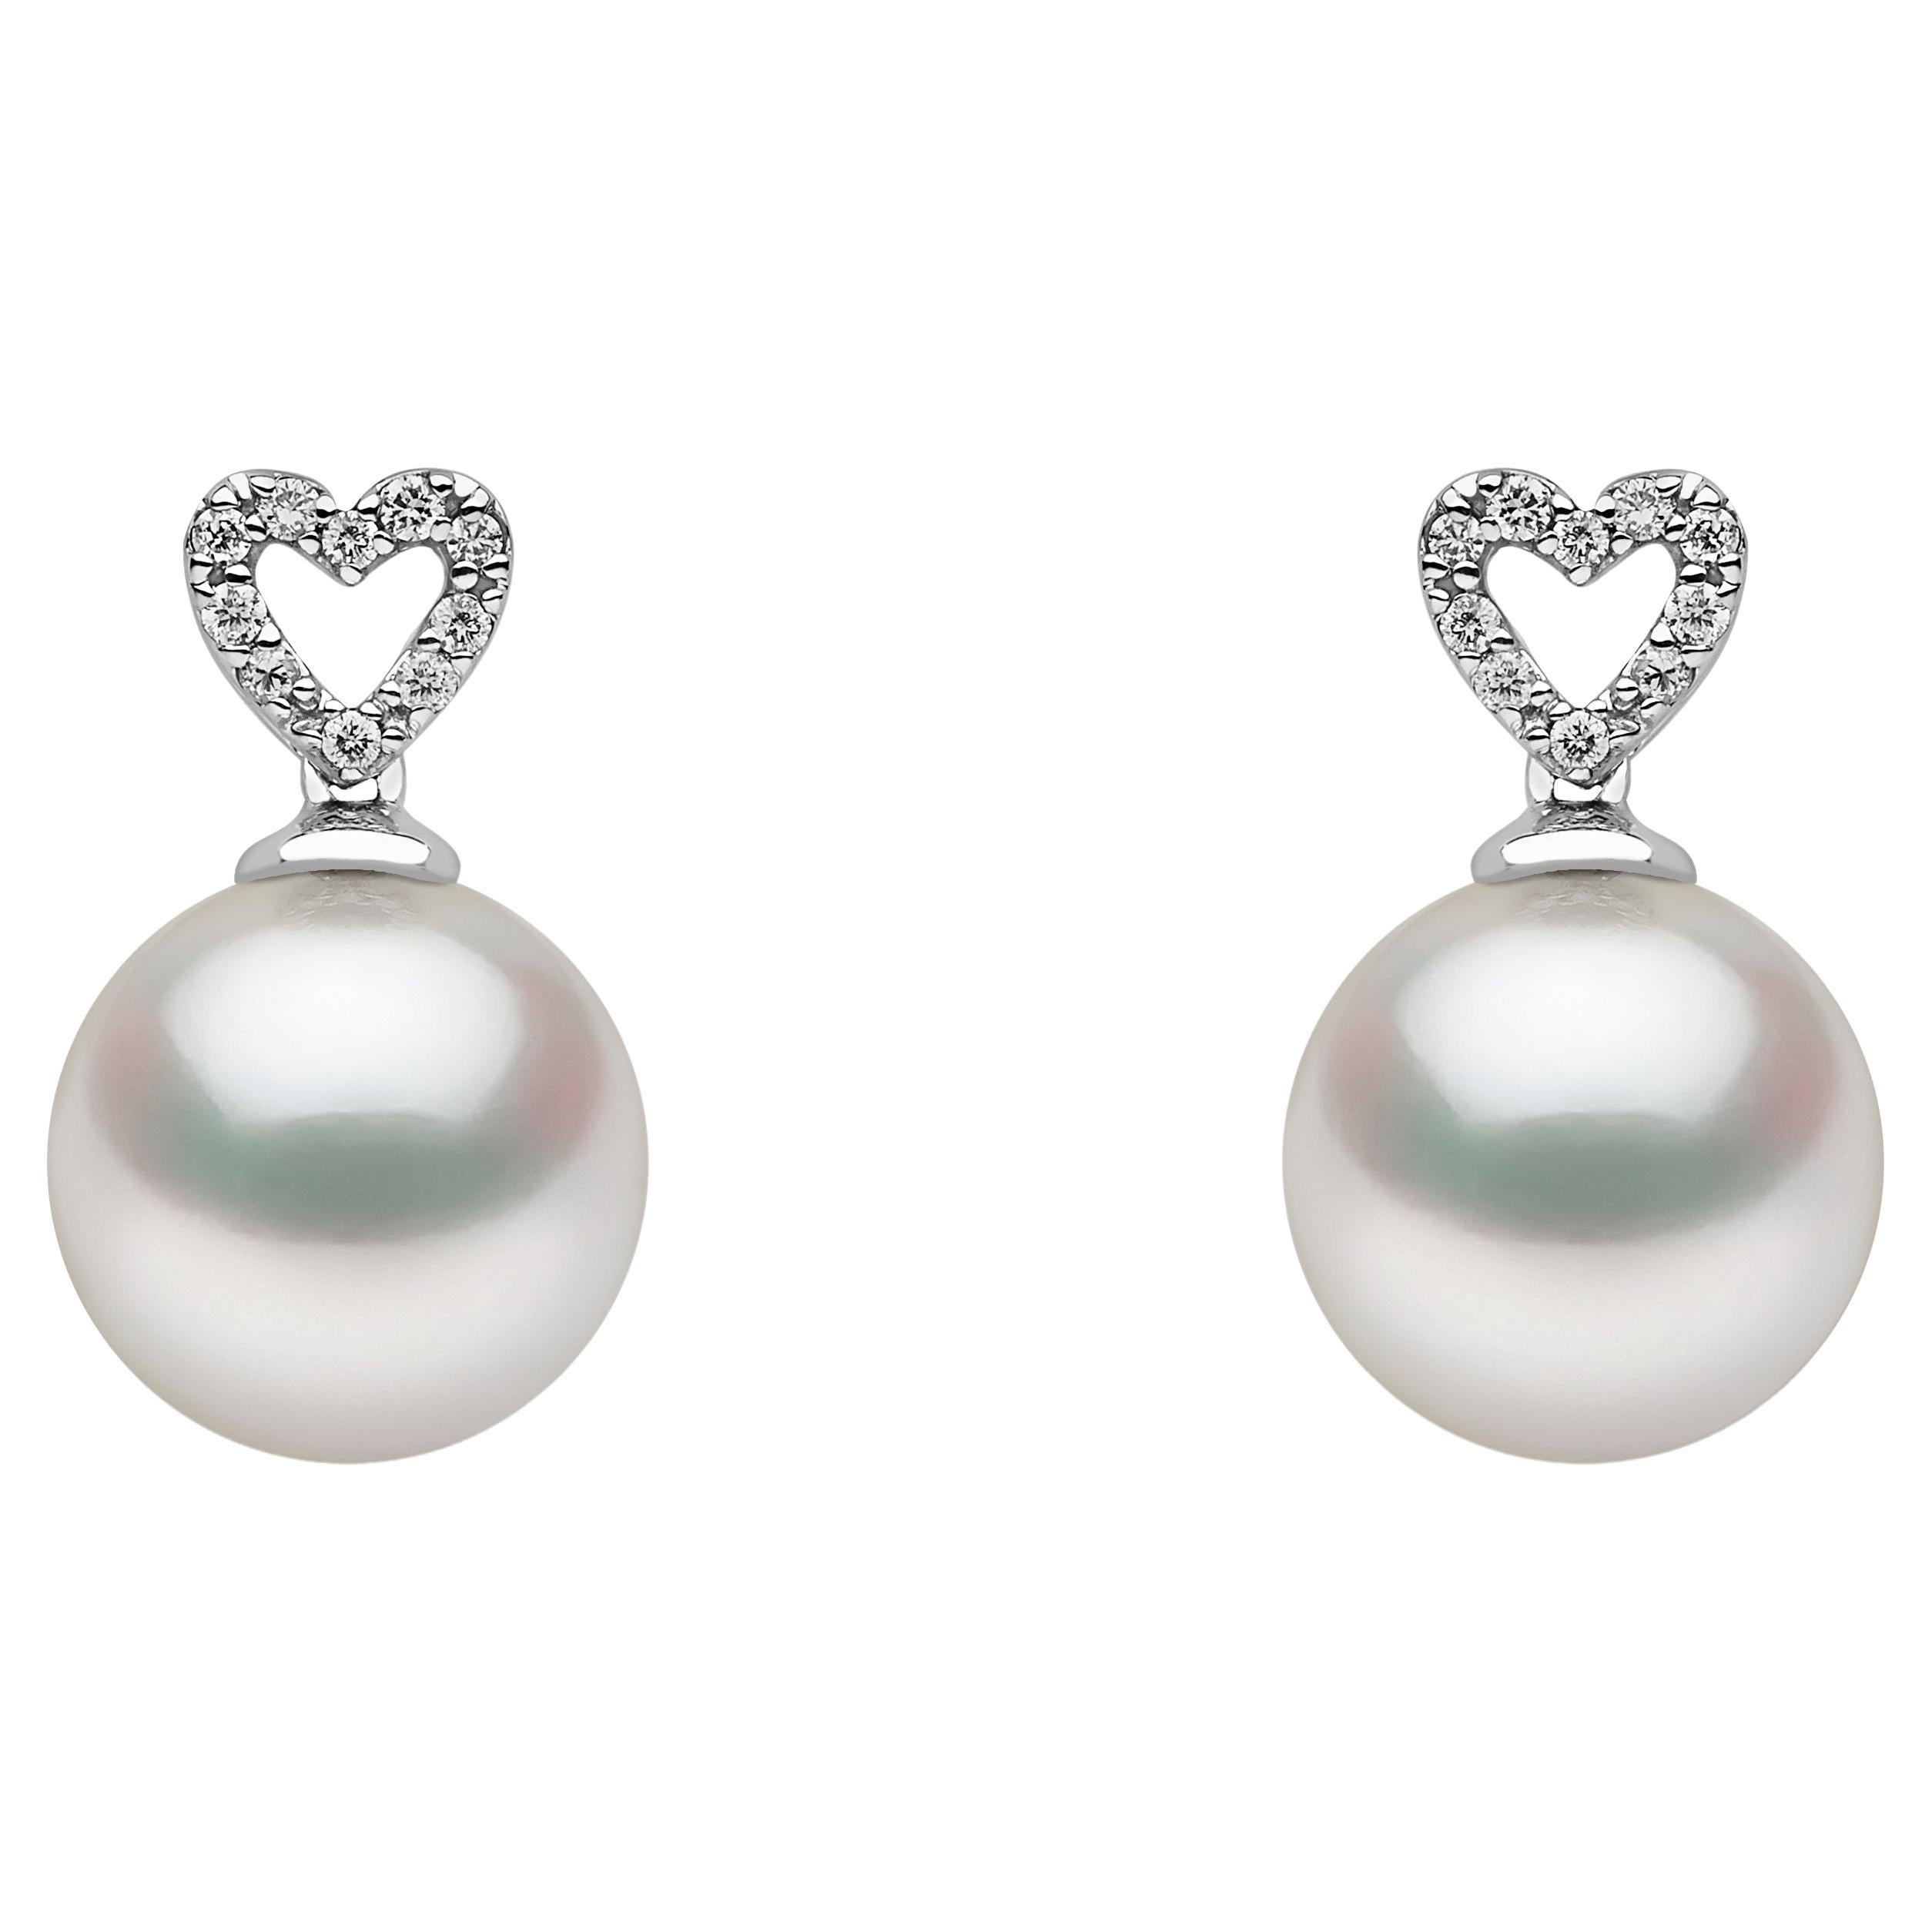 Yoko London South Sea Pearl and Diamond Heart Drop Earrings in 18K White Gold